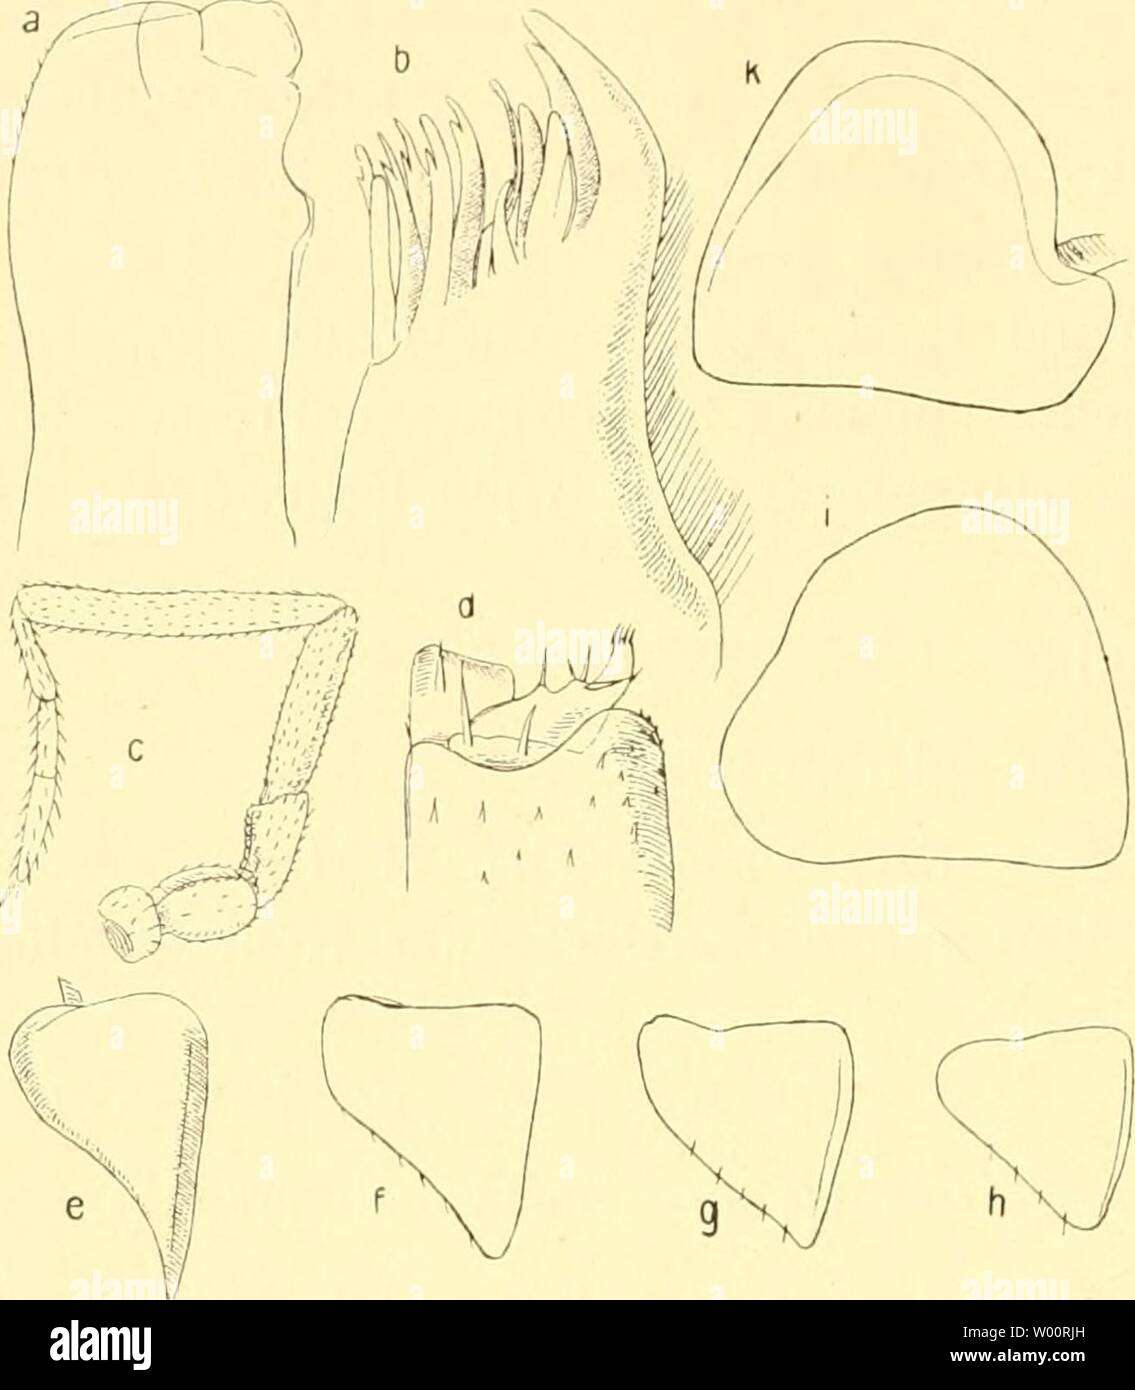 Archive image from page 43 of Die Fauna südwest-Australiens Ergebnisse der. Die Fauna südwest-Australiens. Ergebnisse der Hamburger südwest-australischen Forschungsreise 1905  diefaunasdwest040104mich Year: 1912  42 G. BUDDE-LUND, Manoniscus tuberculatus ii. sp. ). (Taf. I, Fig. 14-20.)    Fig. XXVI. Hanoniscus tuberculatus n. sp. a) Maxill. alt. par.; »»/j. b) Lacinia maxill. prior, par.; •'•'/j. c) Antenna dext.: '6/. d) Maxill. prior, par. apex; o/ e) Pleop. dext. 2. S; 'Vi- f) Pleop. dext. 3. S; 'Vi- g) Pleop. dext. 4. J; i'Vi- h) Pleop. dext. 5. (J; le/. i, k) Pleop. dext. 1. S', Vi- Fund Stock Photo